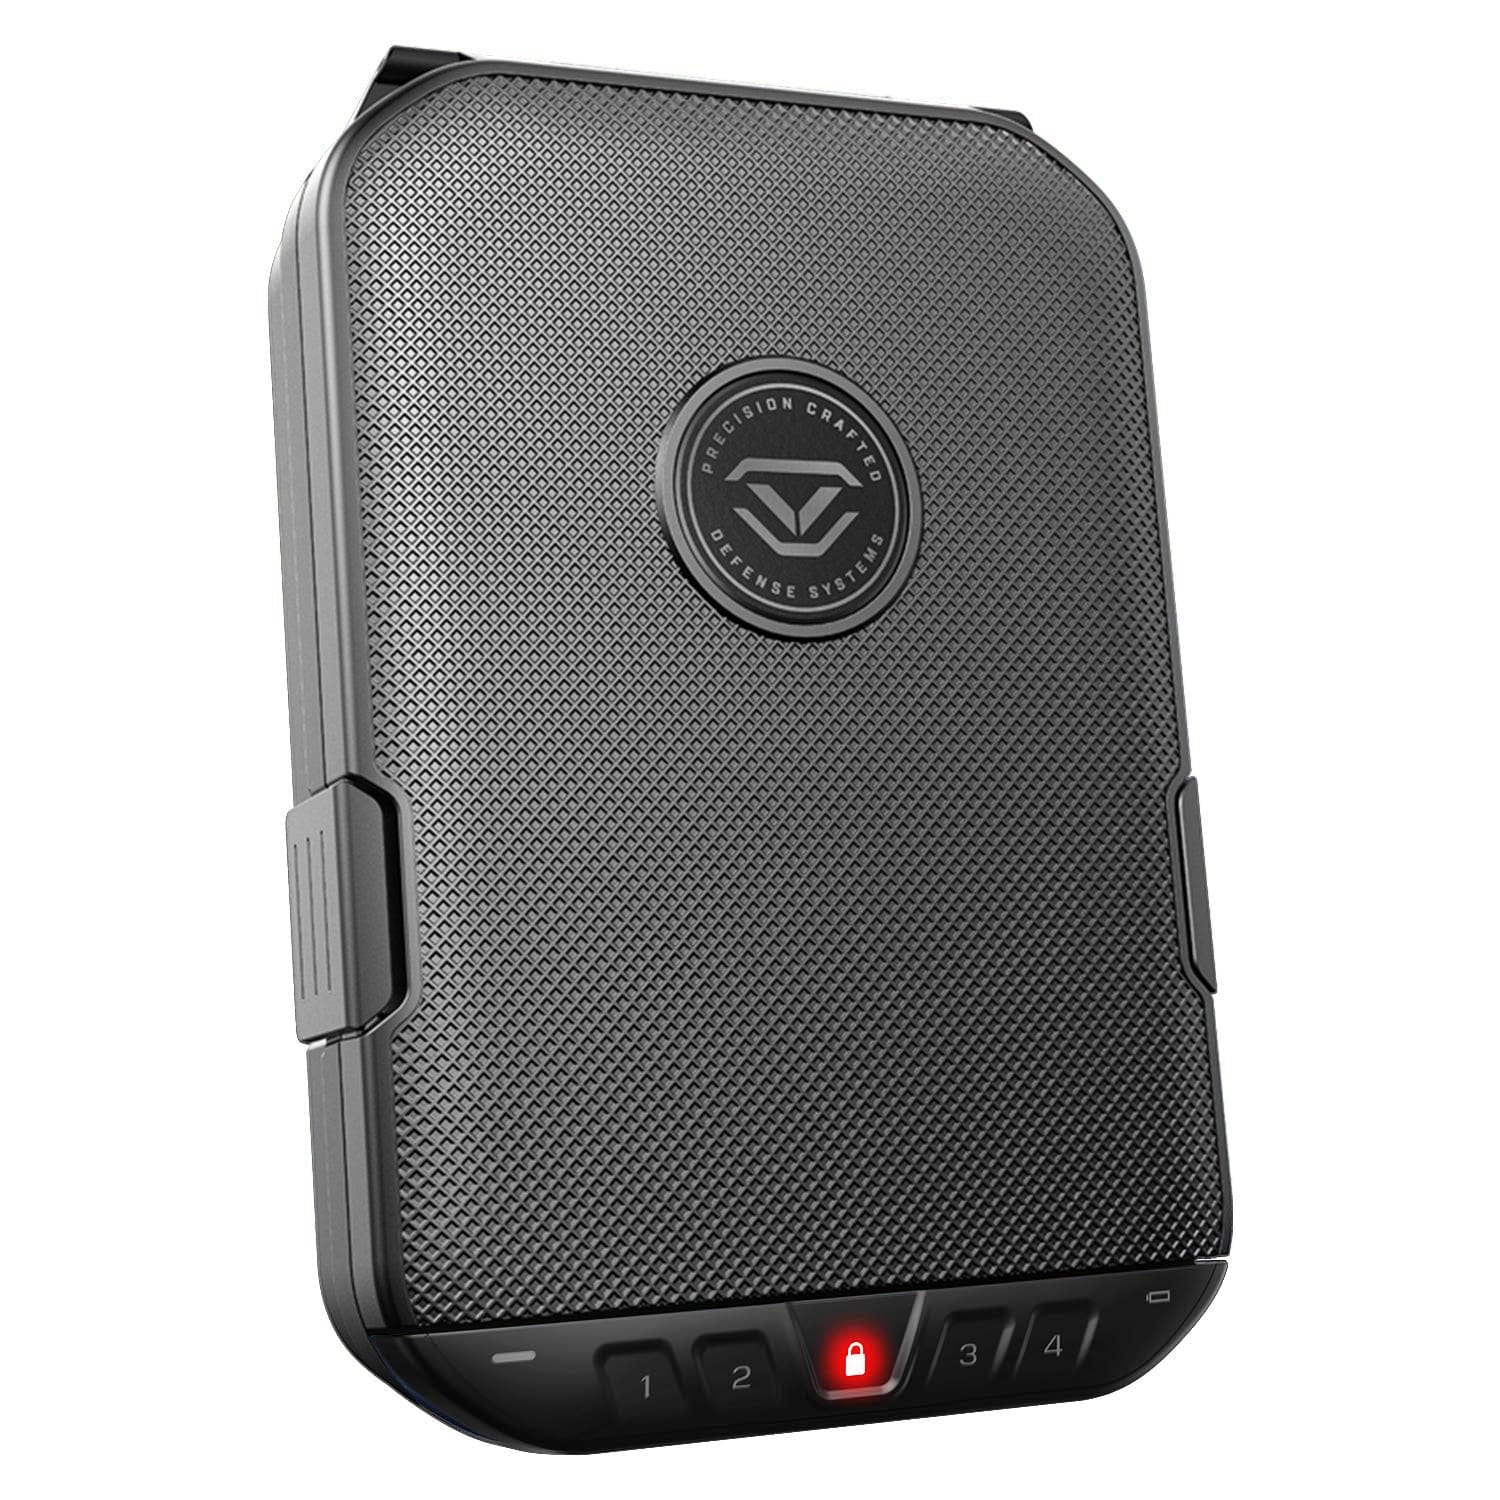 Vaultek LifePod 2.0 Special Edition Non-Biometric Armadillo Safe and Vault